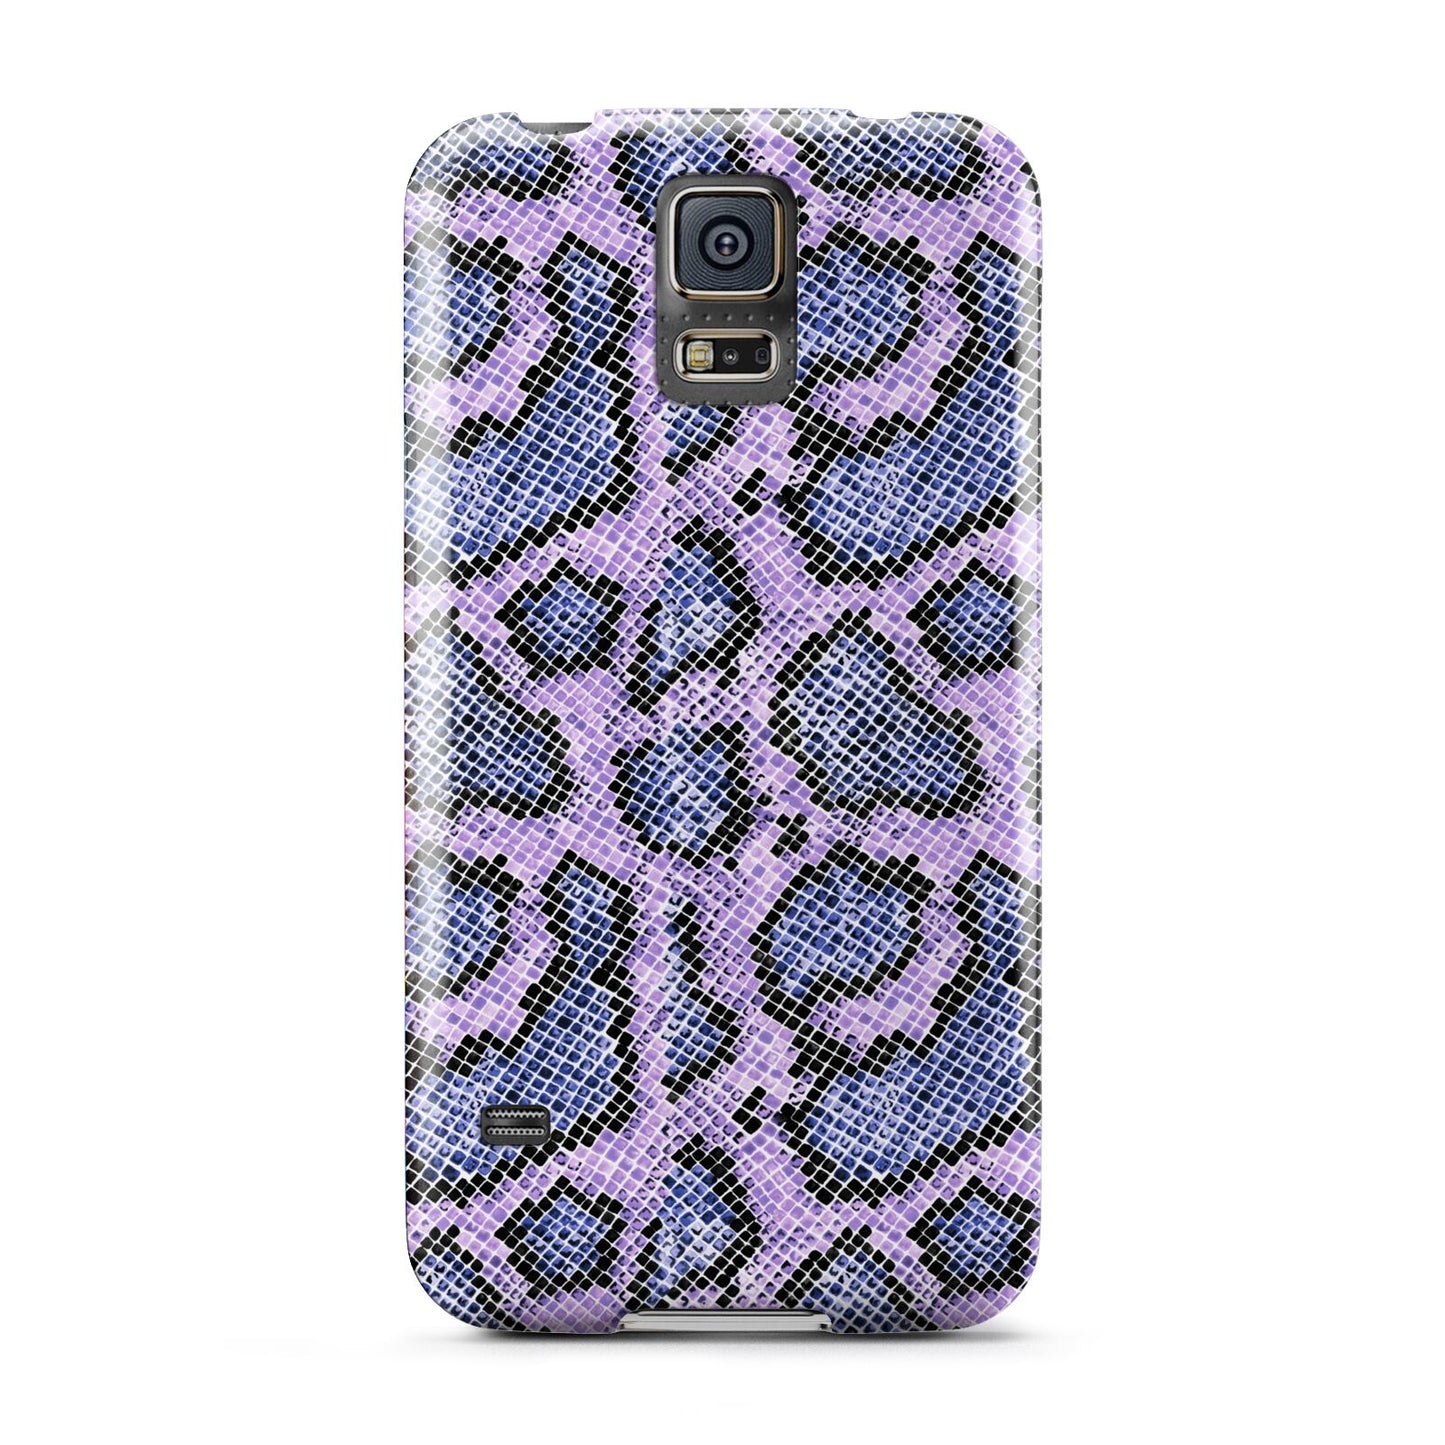 Purple And Blue Snakeskin Samsung Galaxy S5 Case